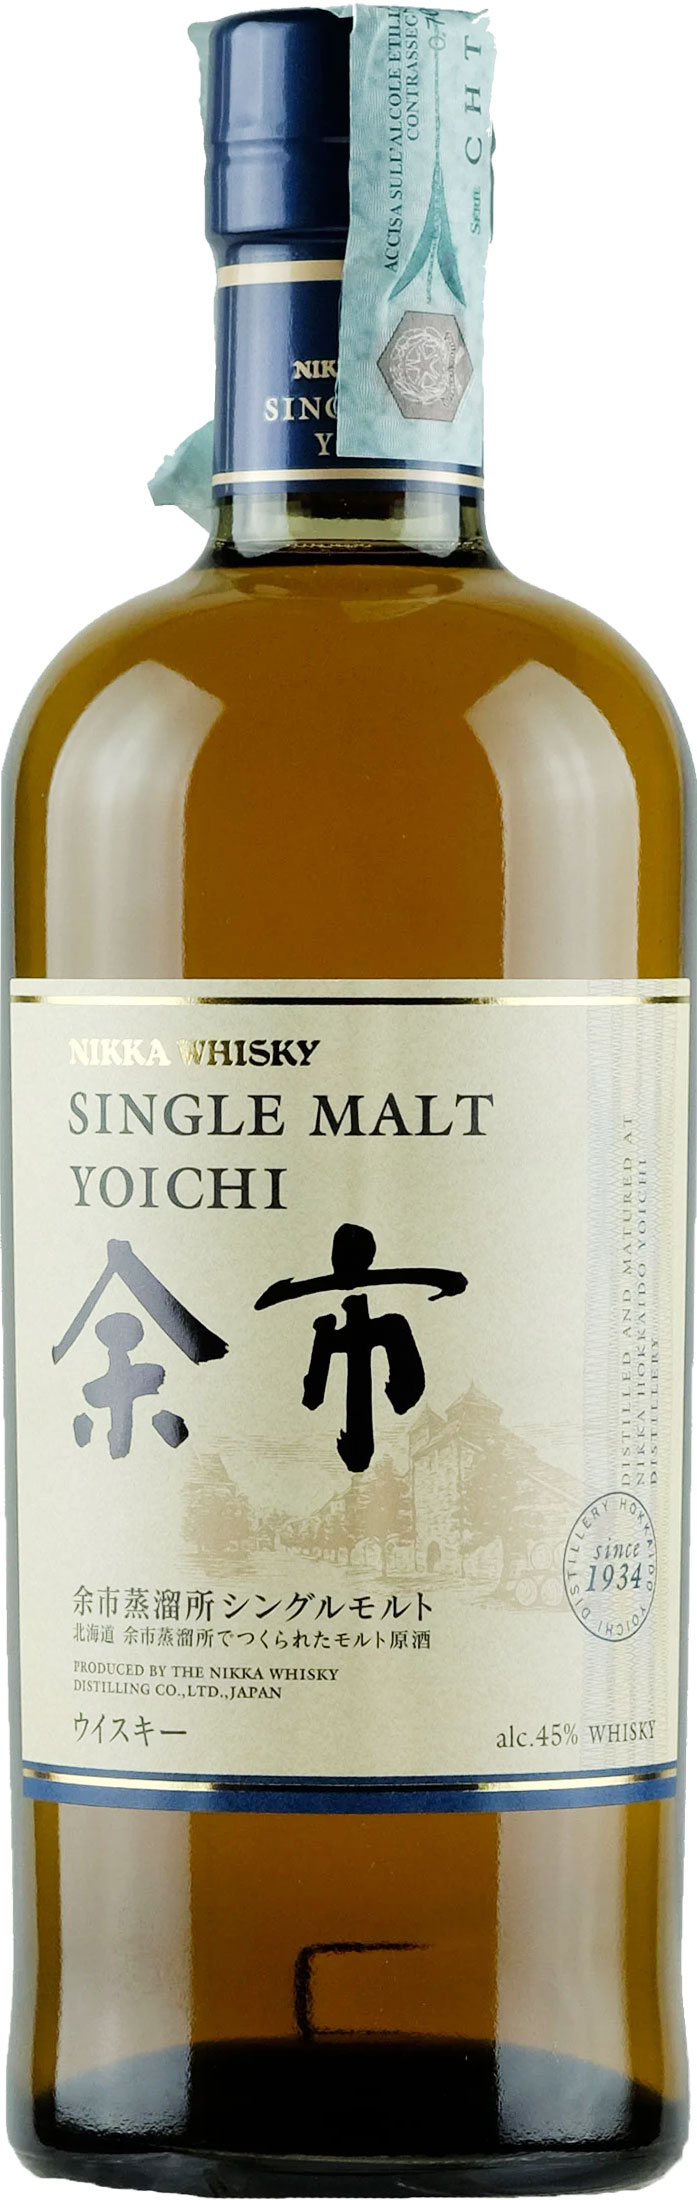 Nikka Whisky Yoichi Single Malt